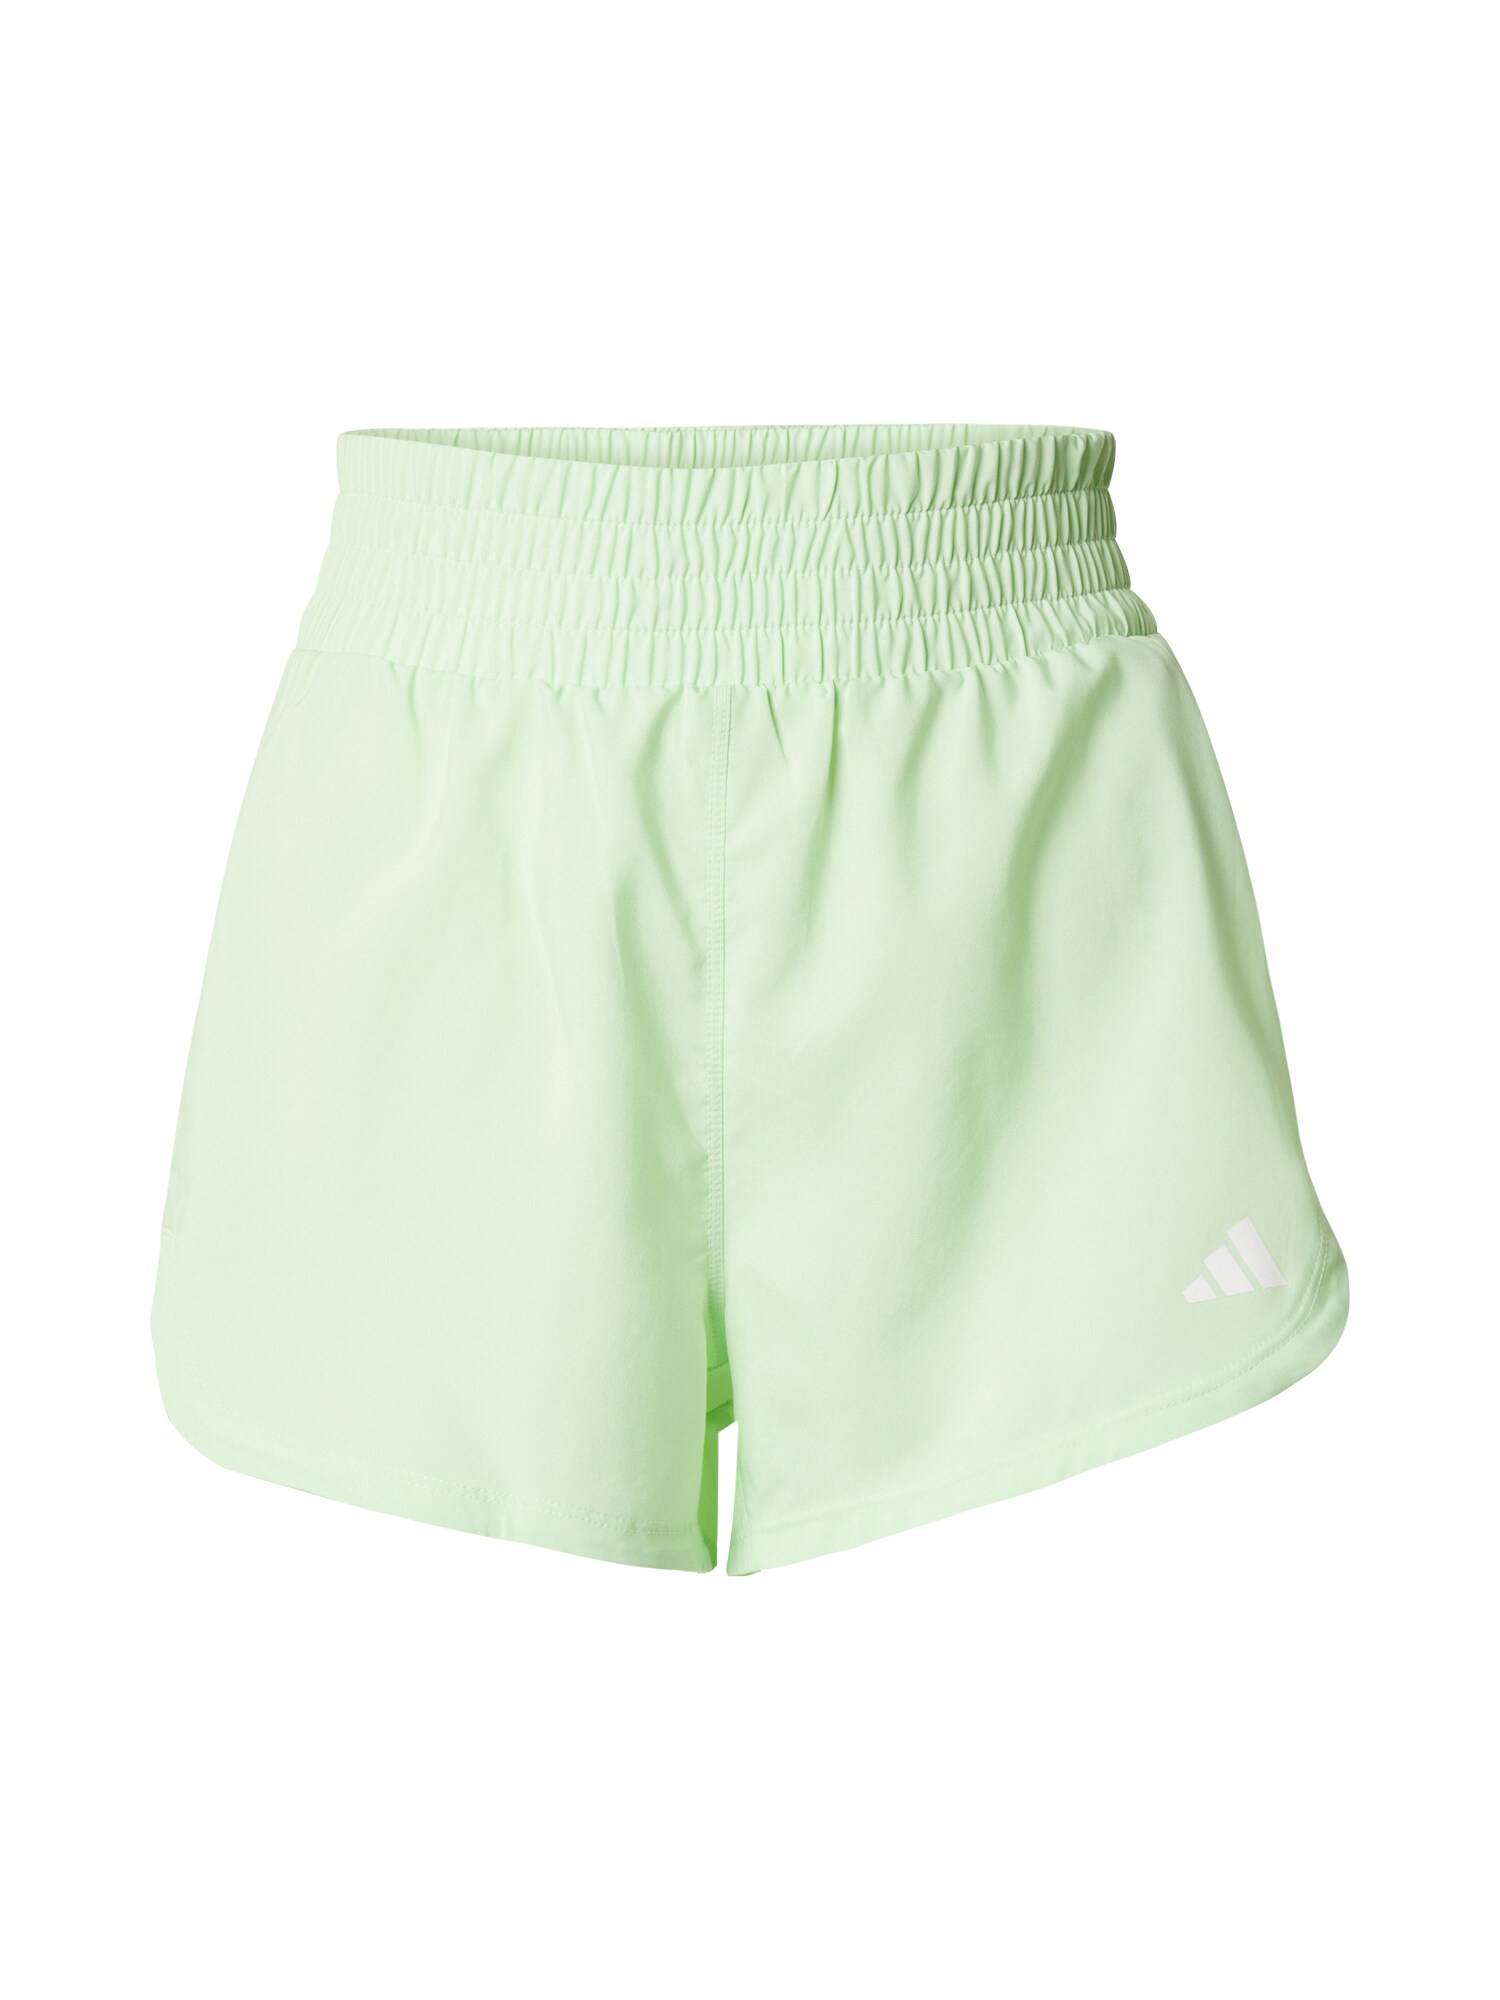 ADIDAS PERFORMANCE Funkčné nohavice 'PACER'  pastelovo zelená / biela